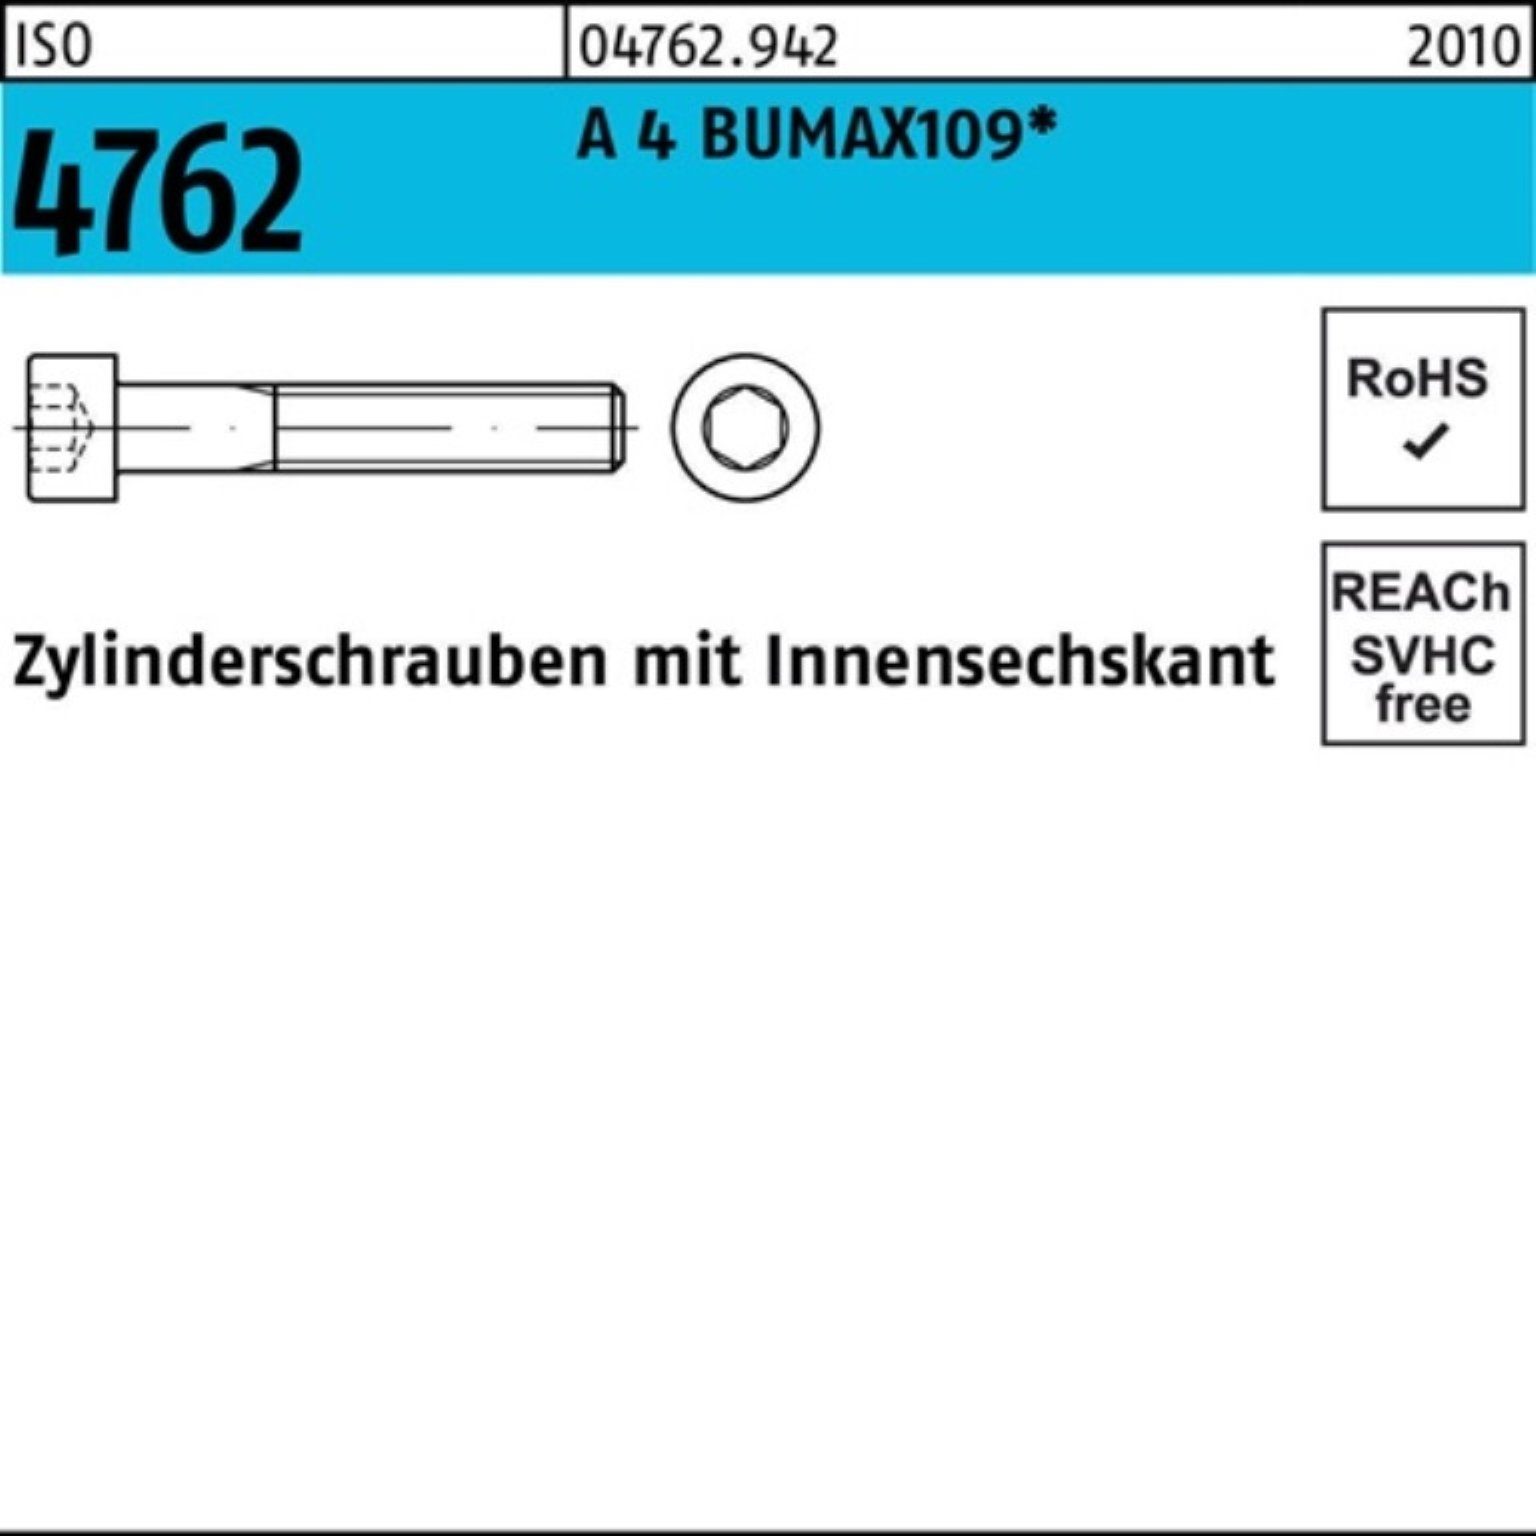 Bufab Zylinderschraube 100er Pack Zylinderschraube ISO 4762 Innen-6kt M12x 60 A 4 BUMAX109 25